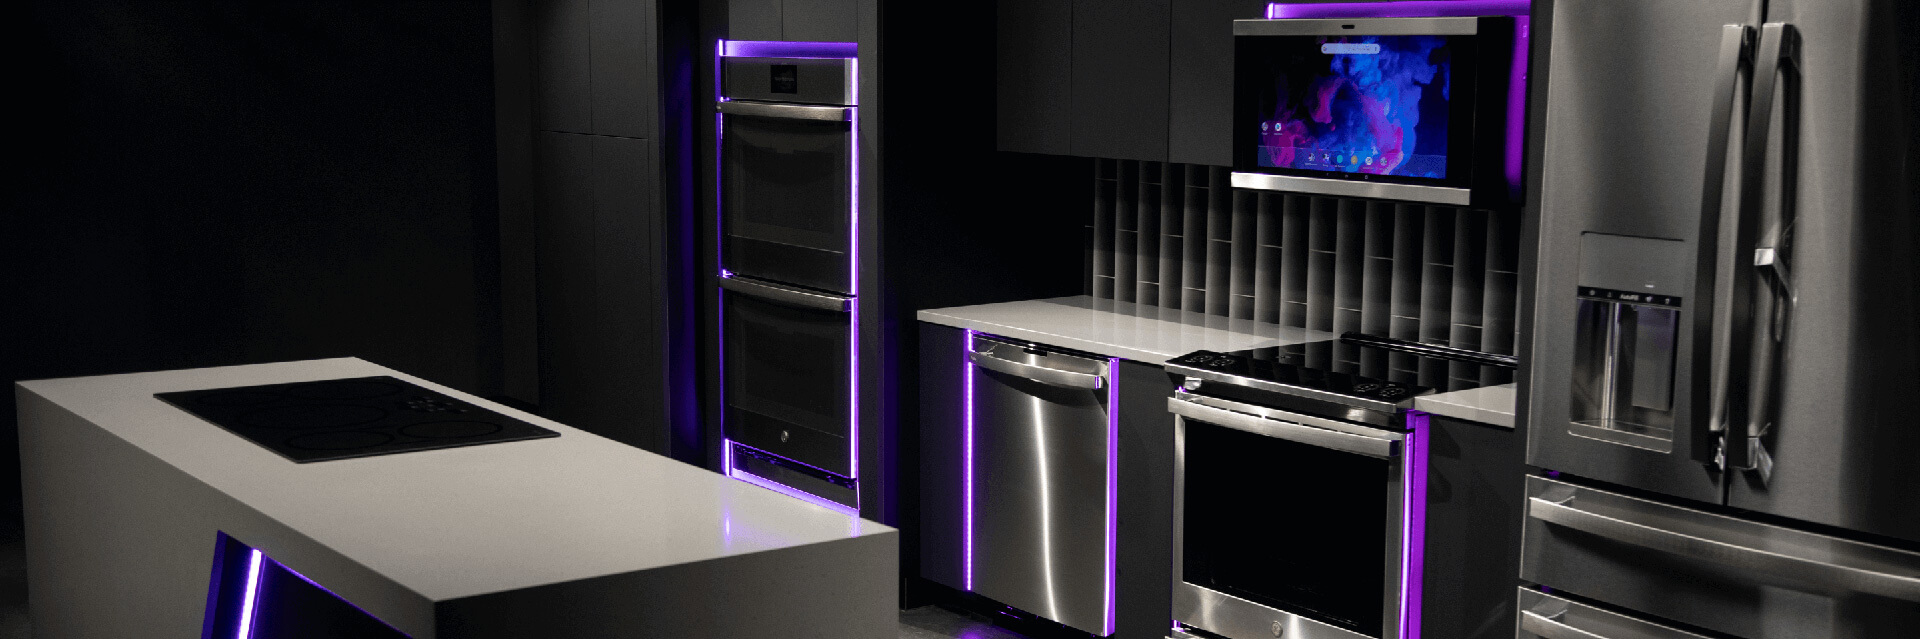 GE Profile Kitchen Appliances Rebate